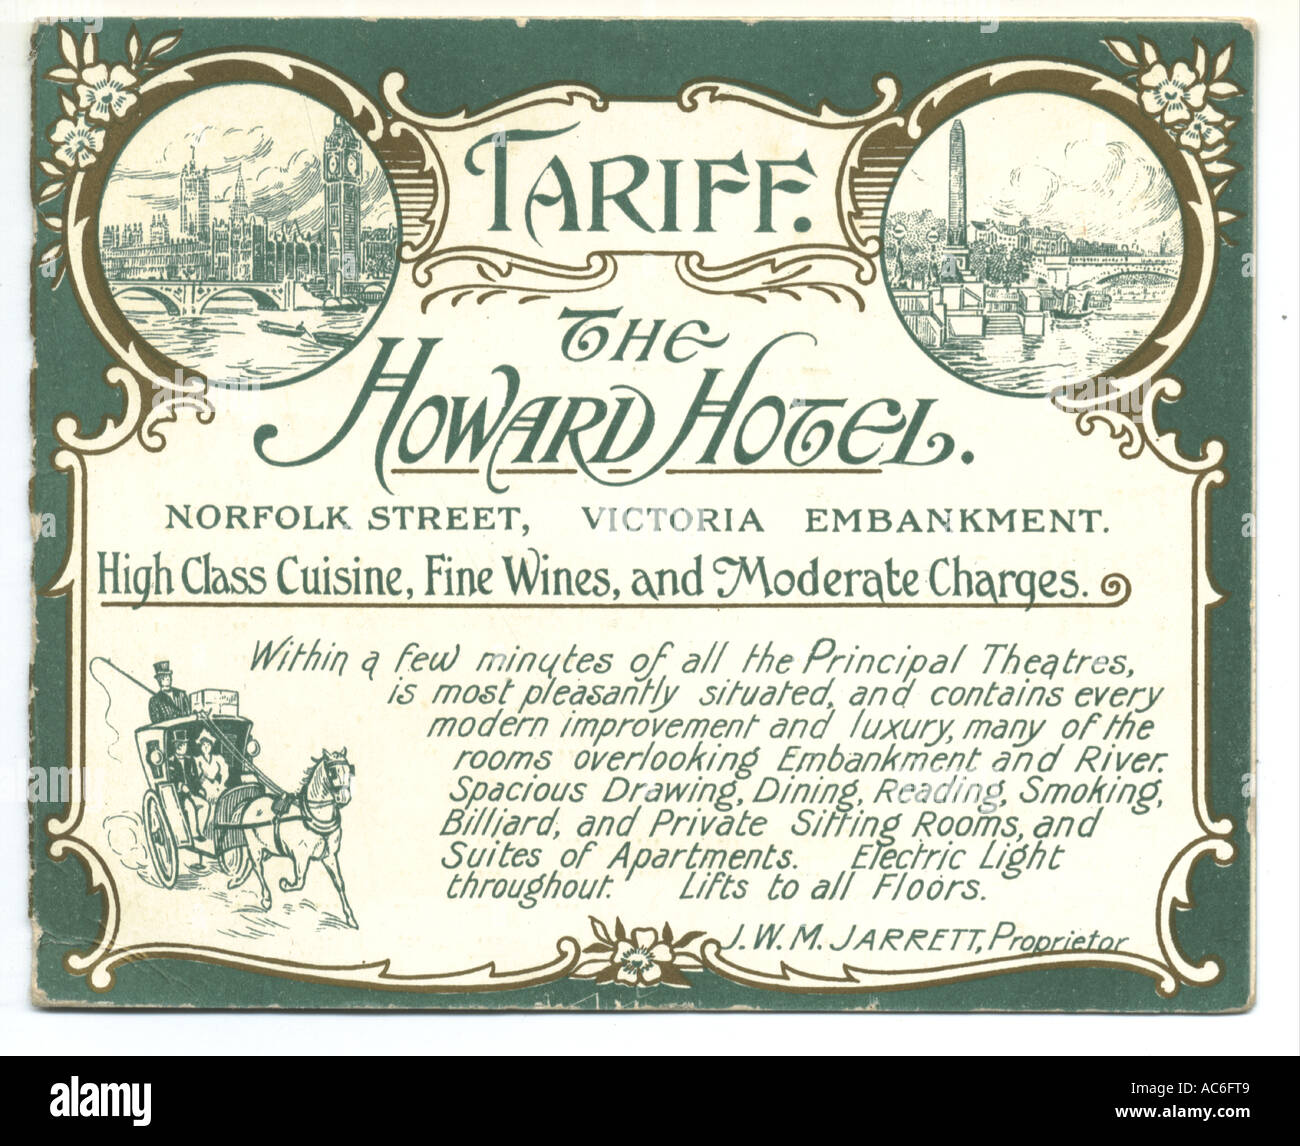 Tarif für das Howard Hotel, London, um 1890 Stockfoto